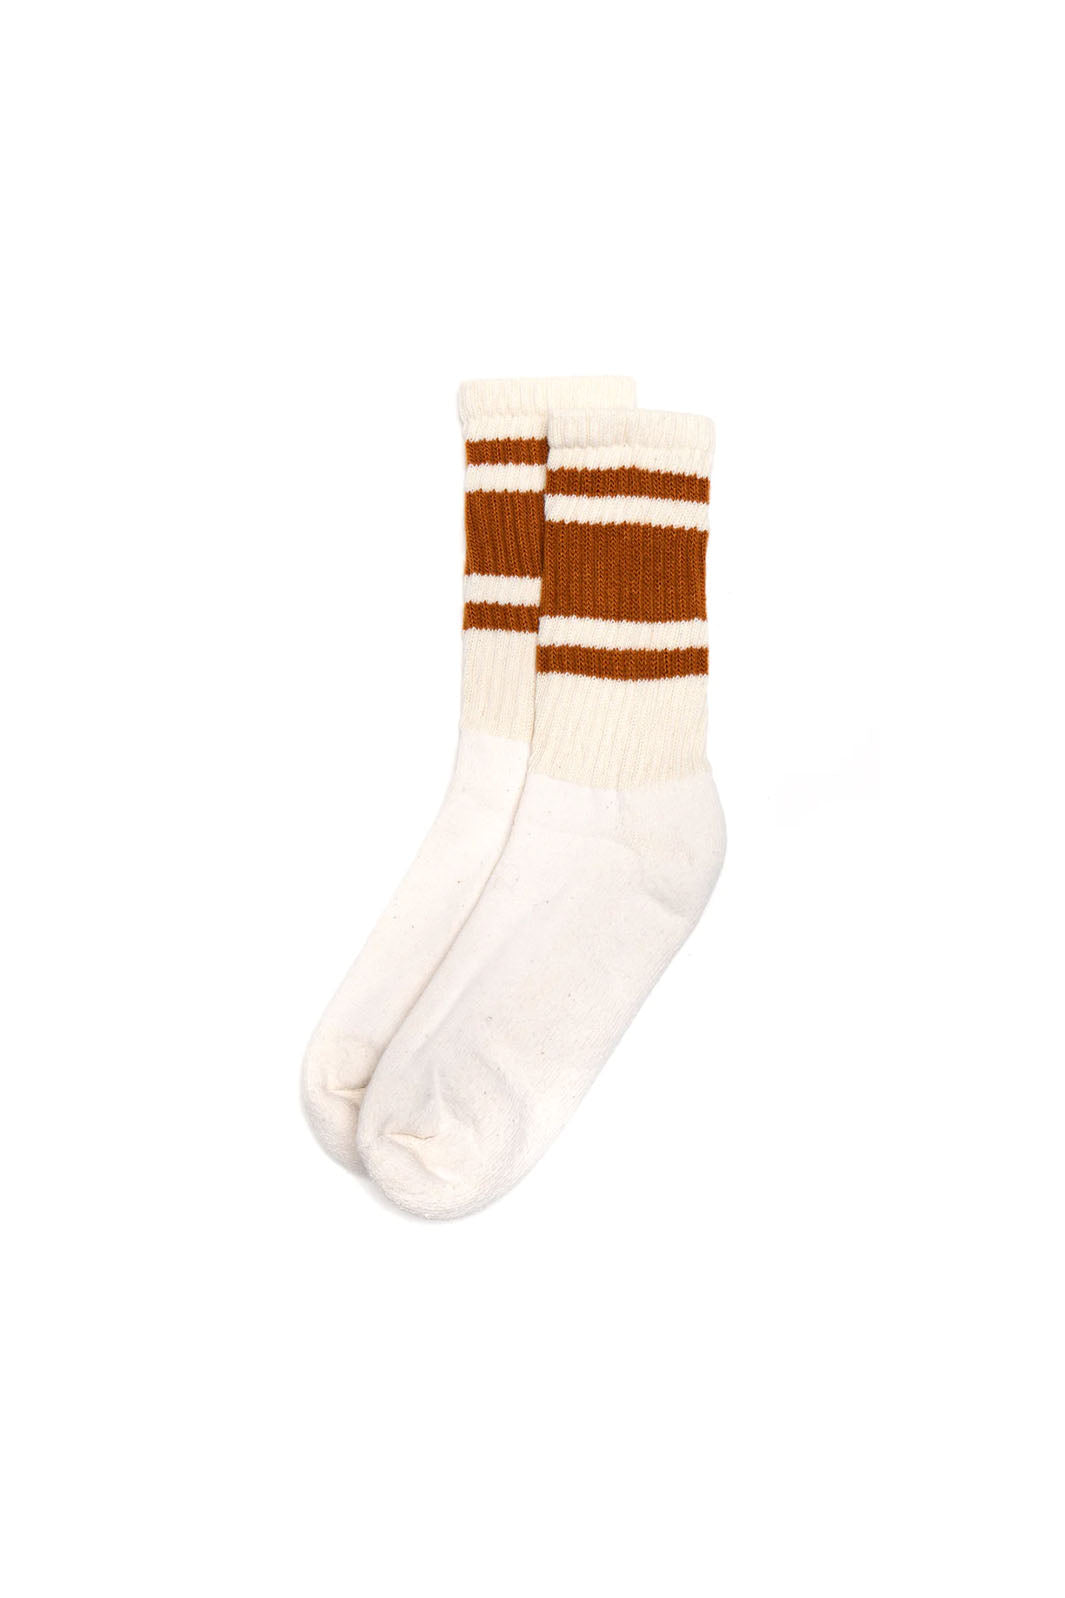 The Mono Stripe Sock - Texas Orange